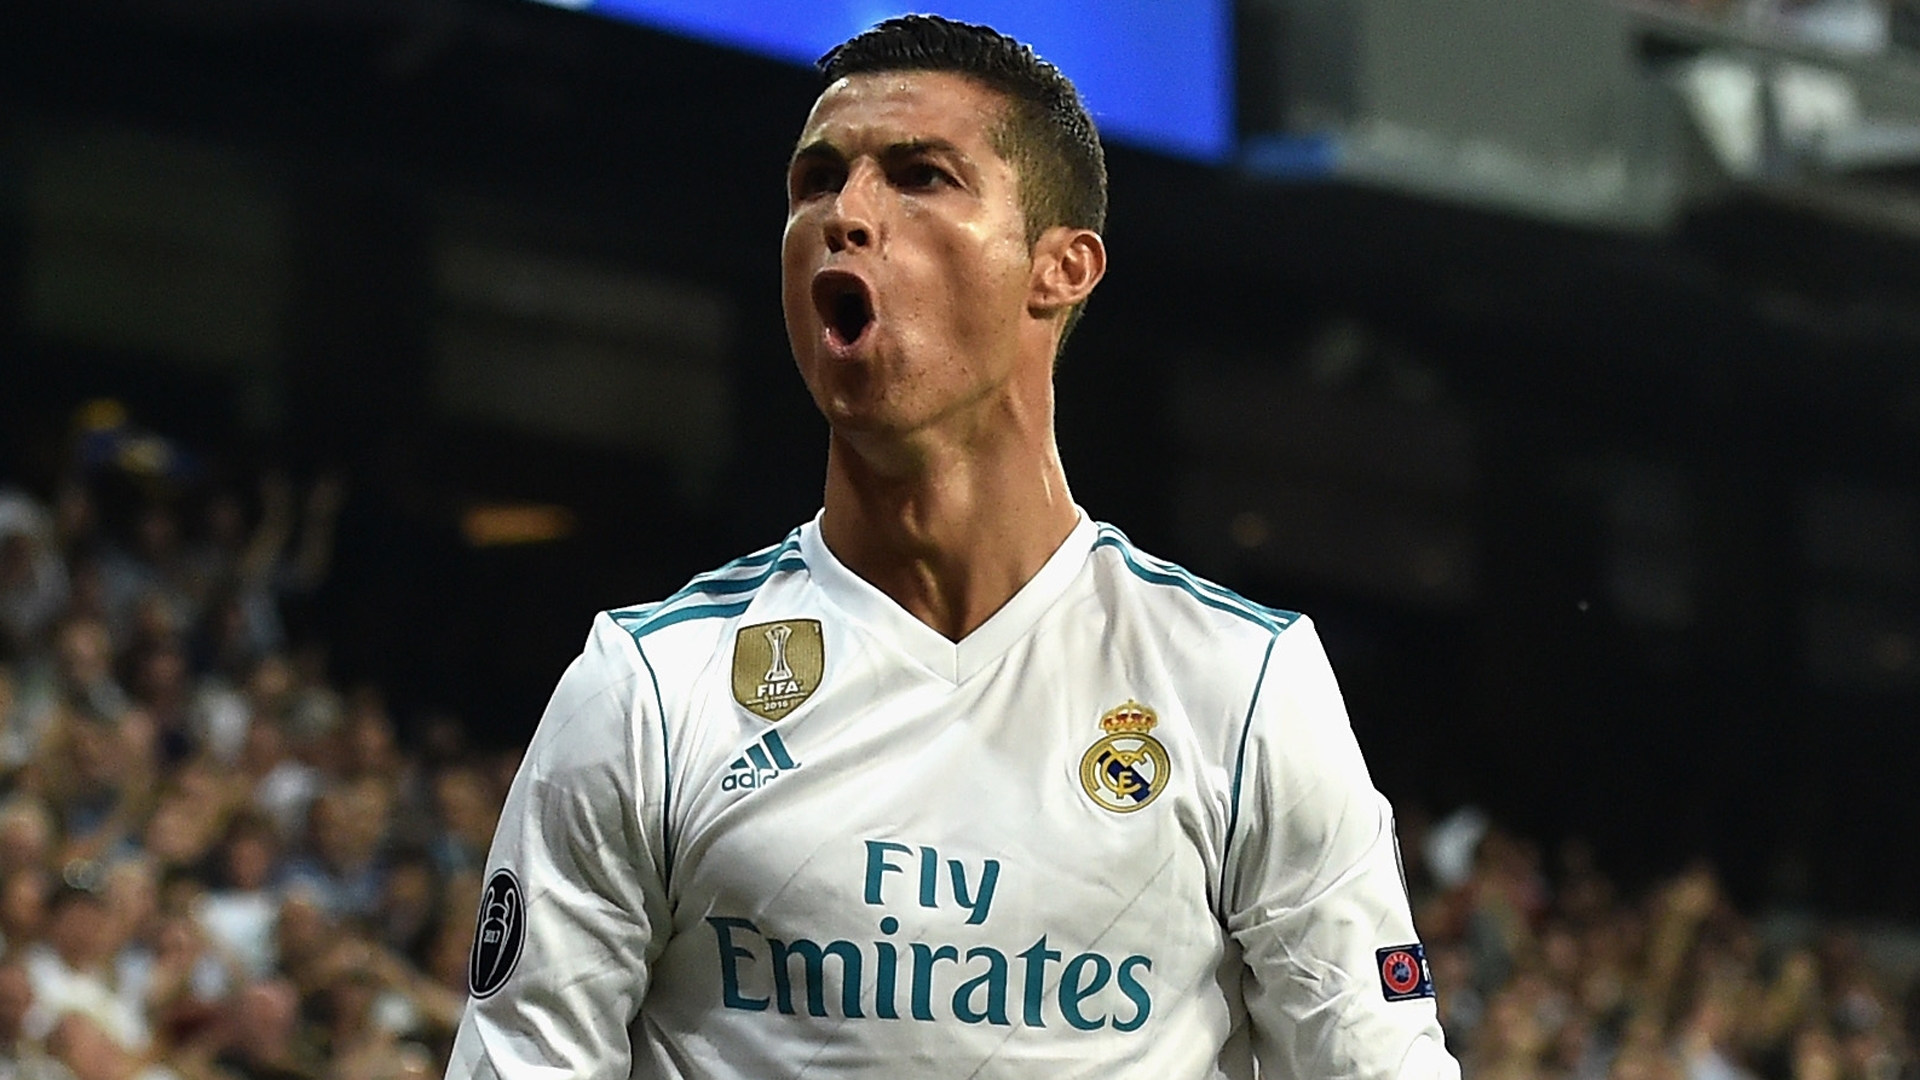 Cristiano Ronaldo - Real Madrid 